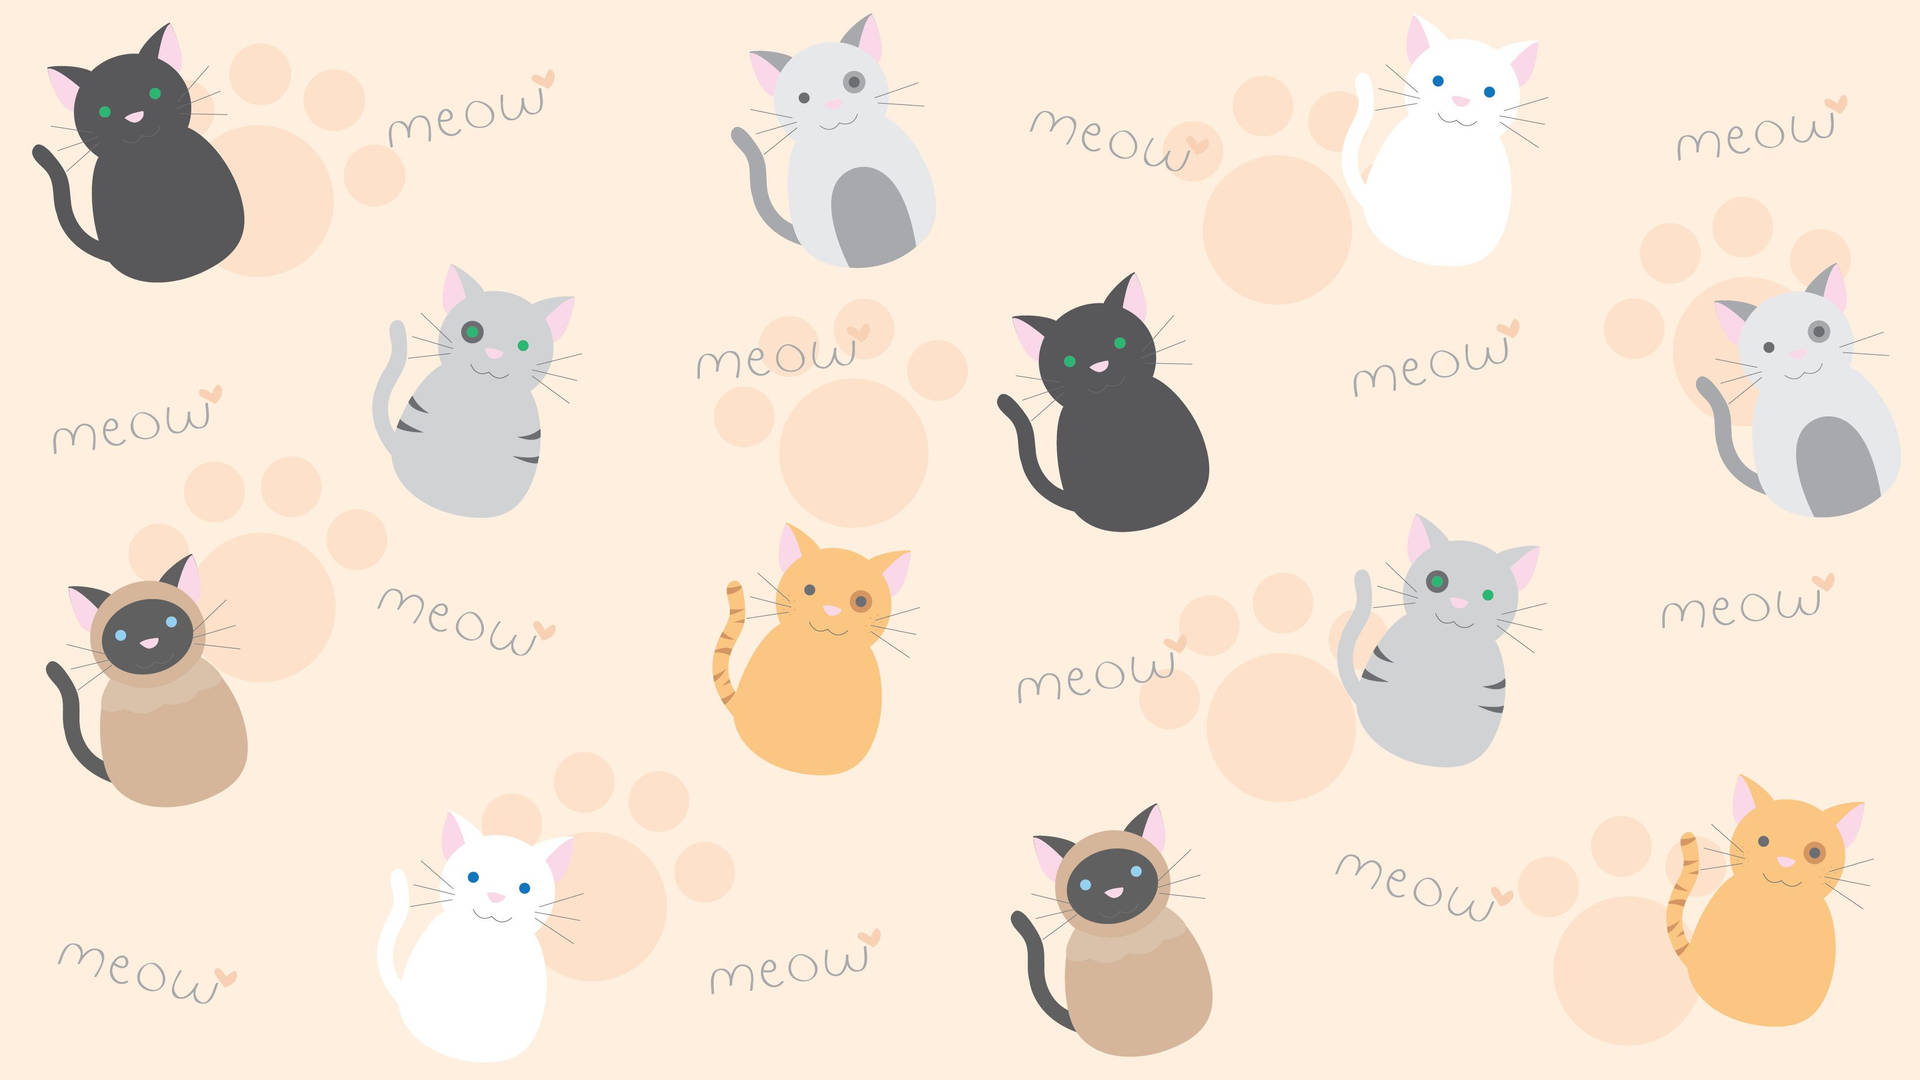 Cat And Meow Prints On Kawaii Ipad